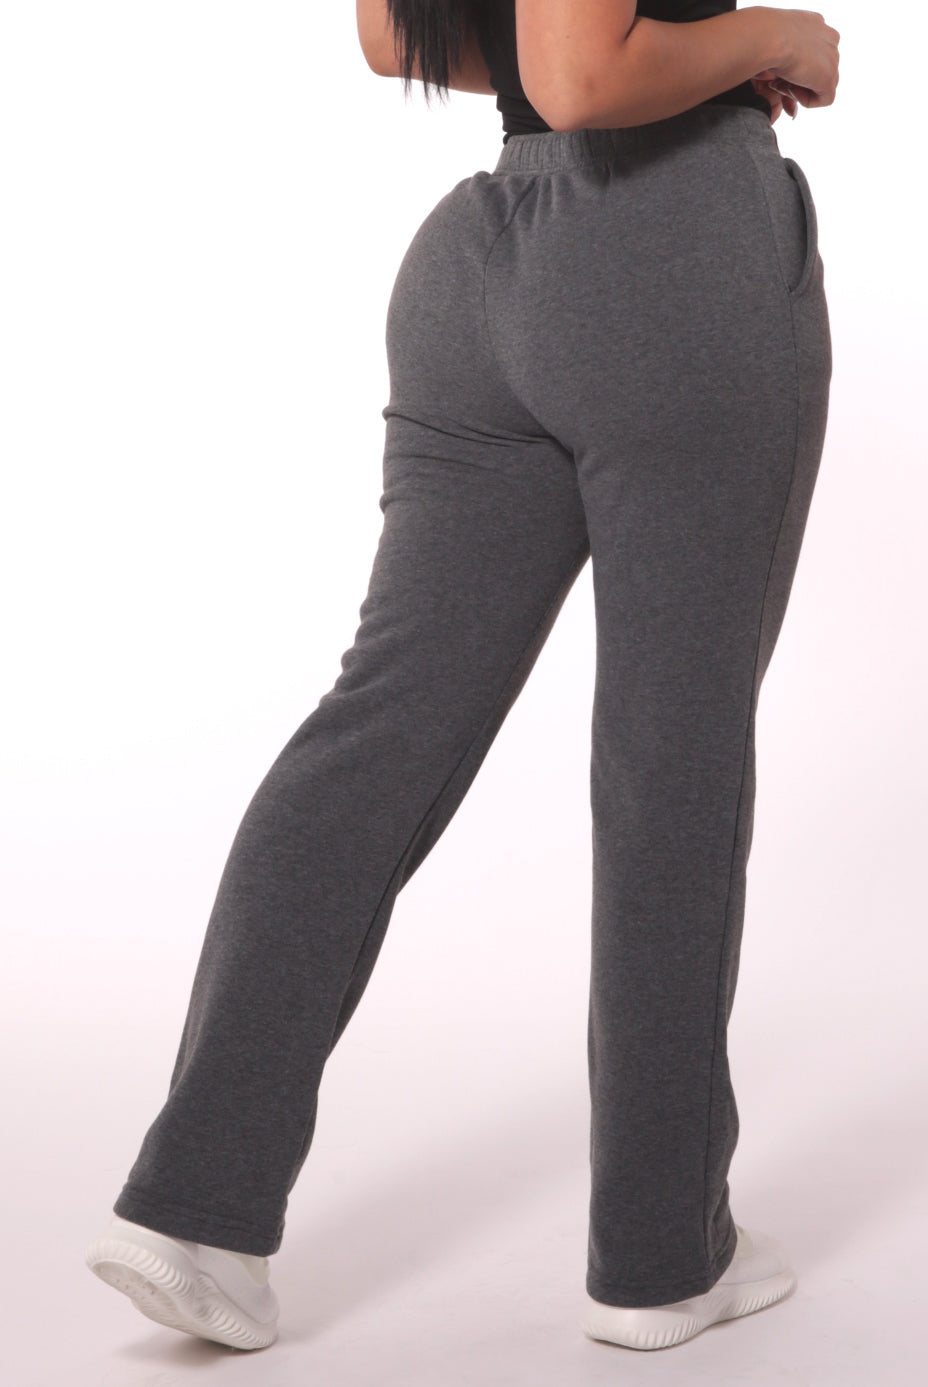 Fleece Lined Straight Leg Sweatpants - Dark Heather Grey - SHOSHO Fashion